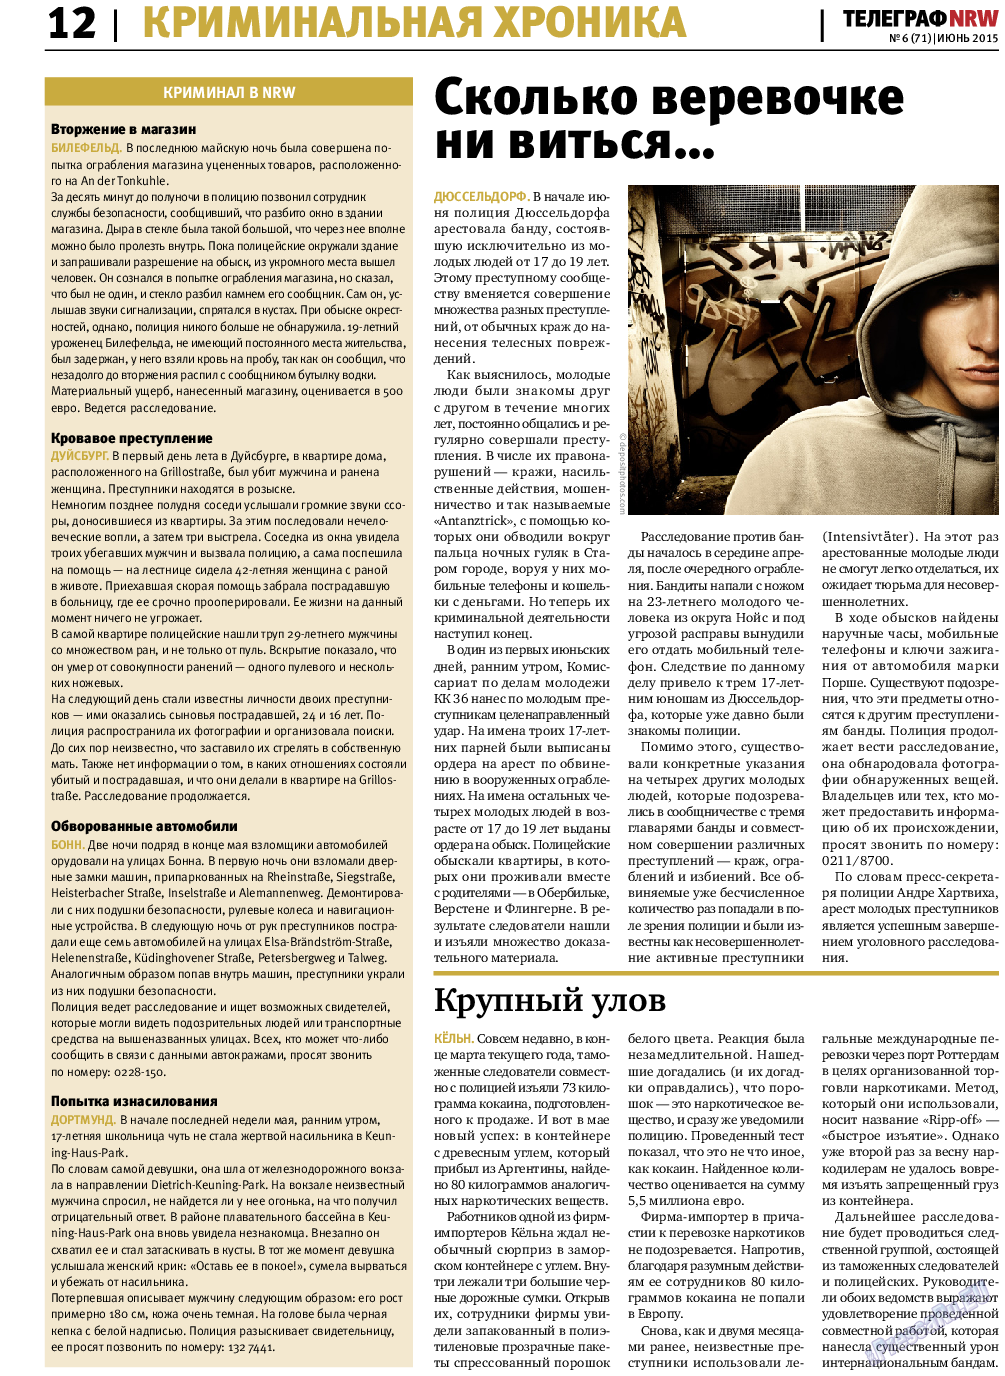 Телеграф NRW, газета. 2015 №6 стр.12